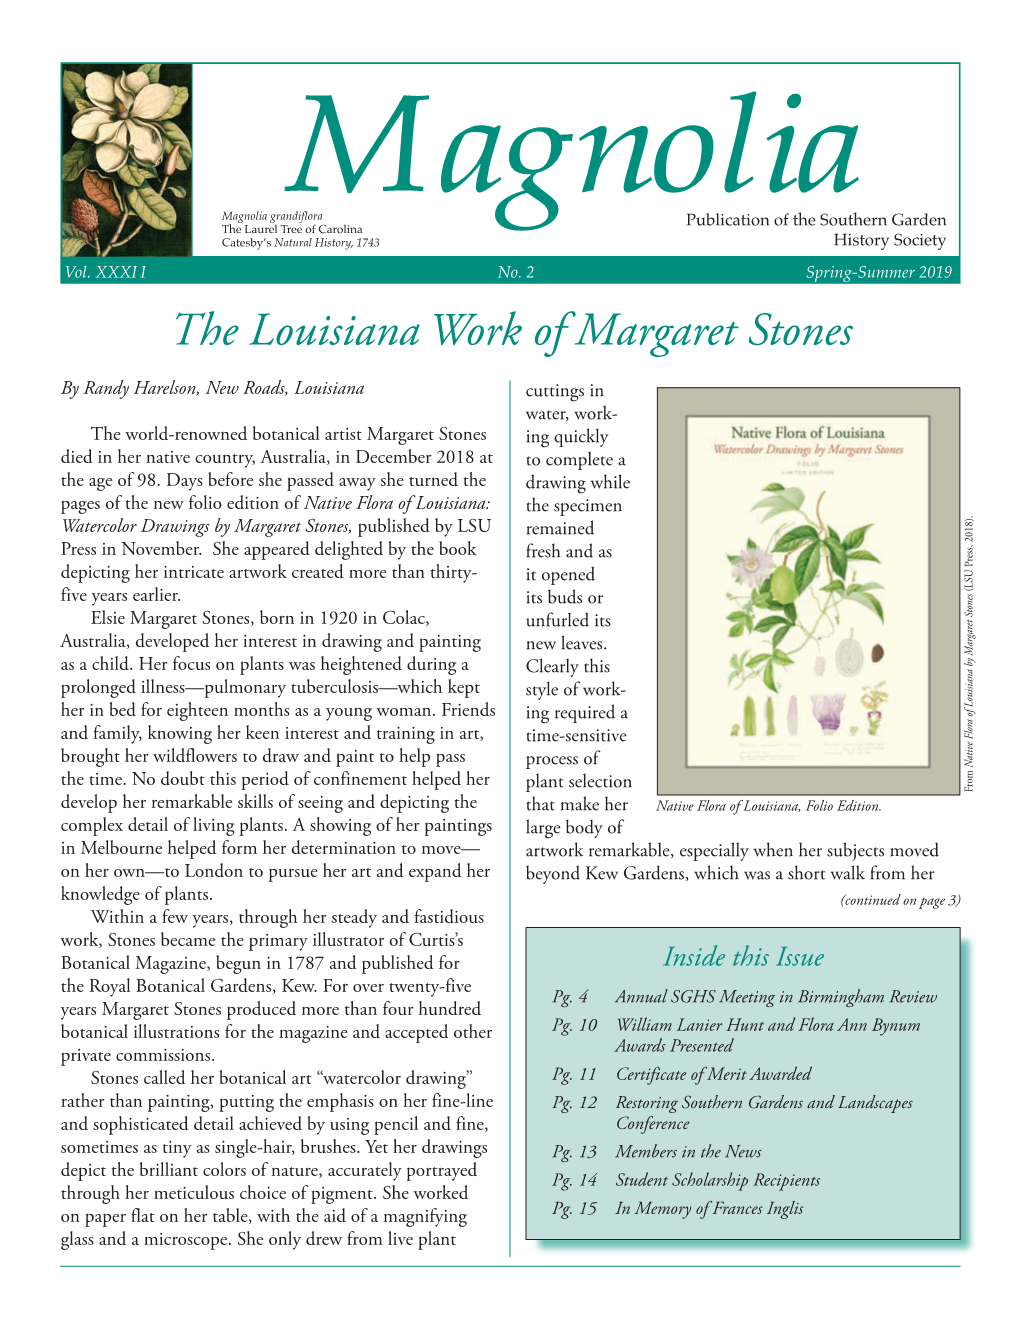 The Louisiana Work of Margaret Stones